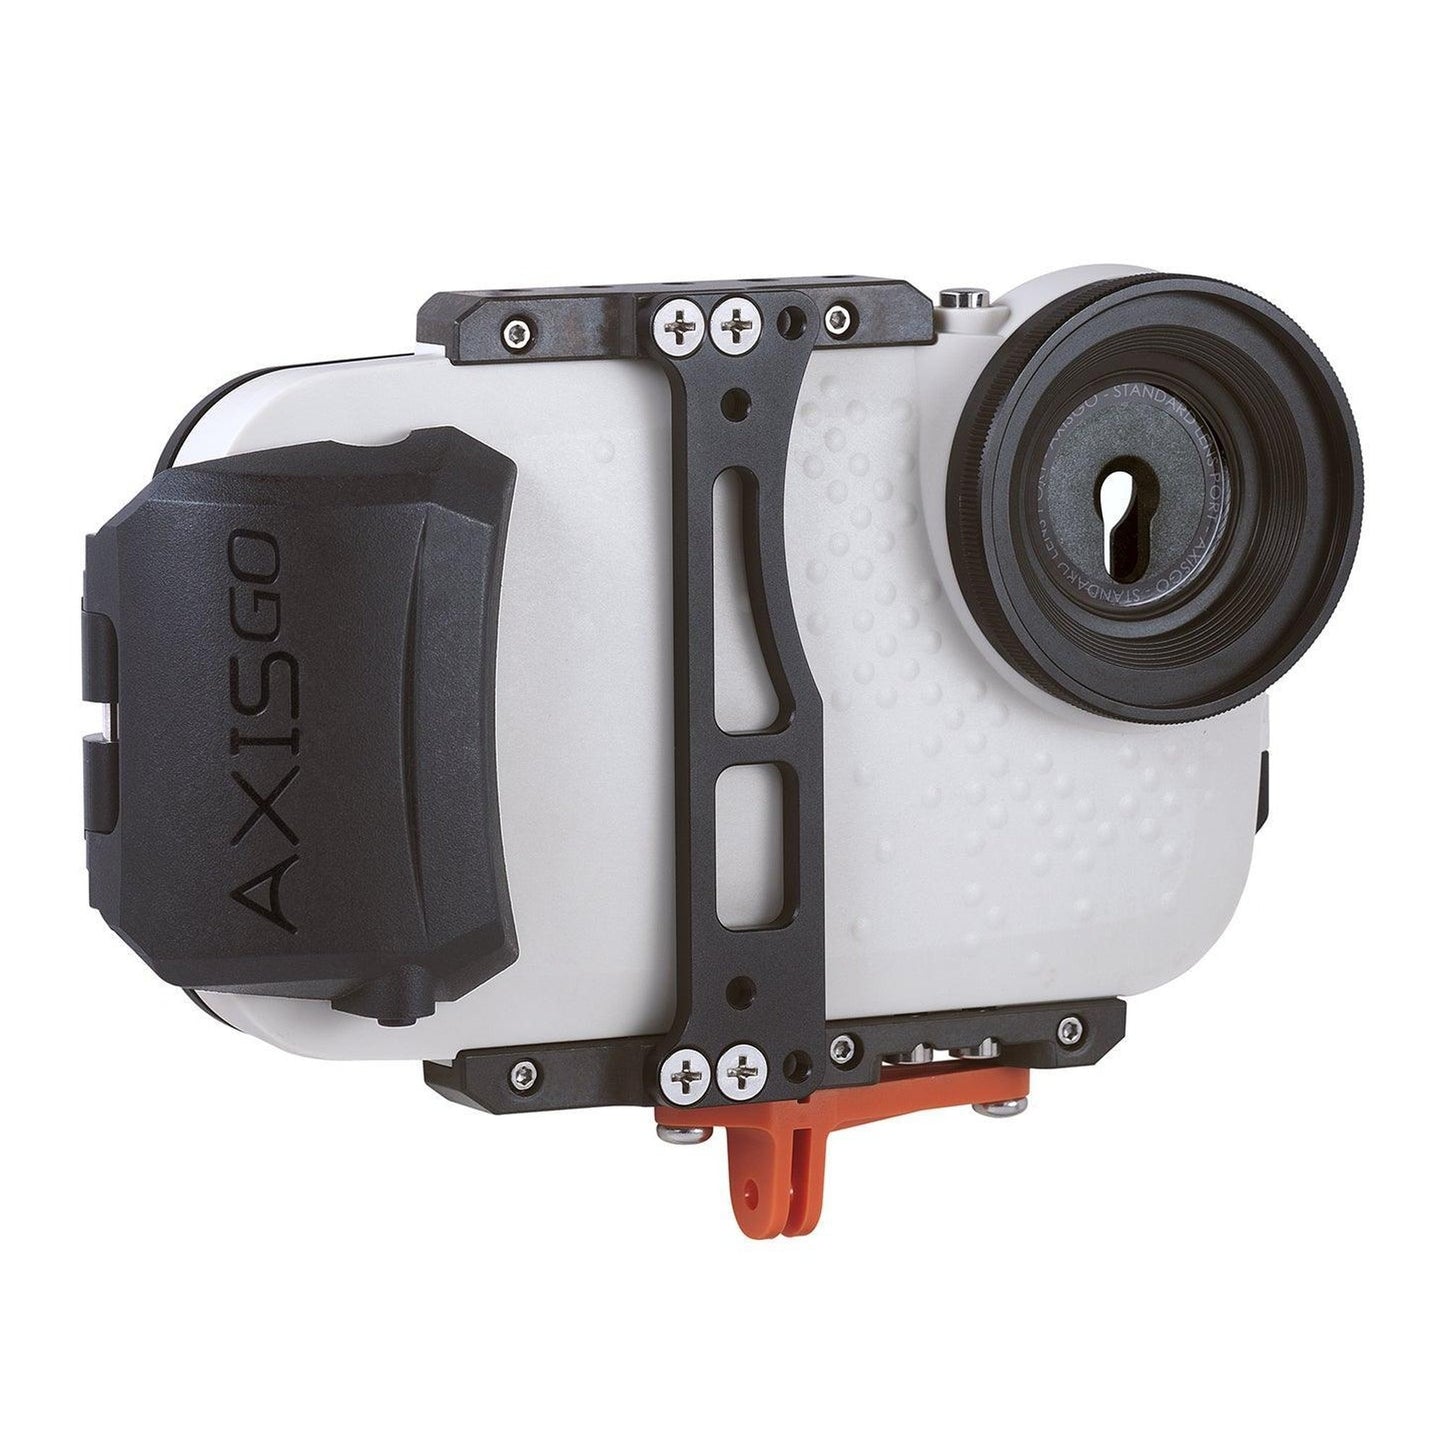 AxisGO 7+/8+ Action Mounting Kit